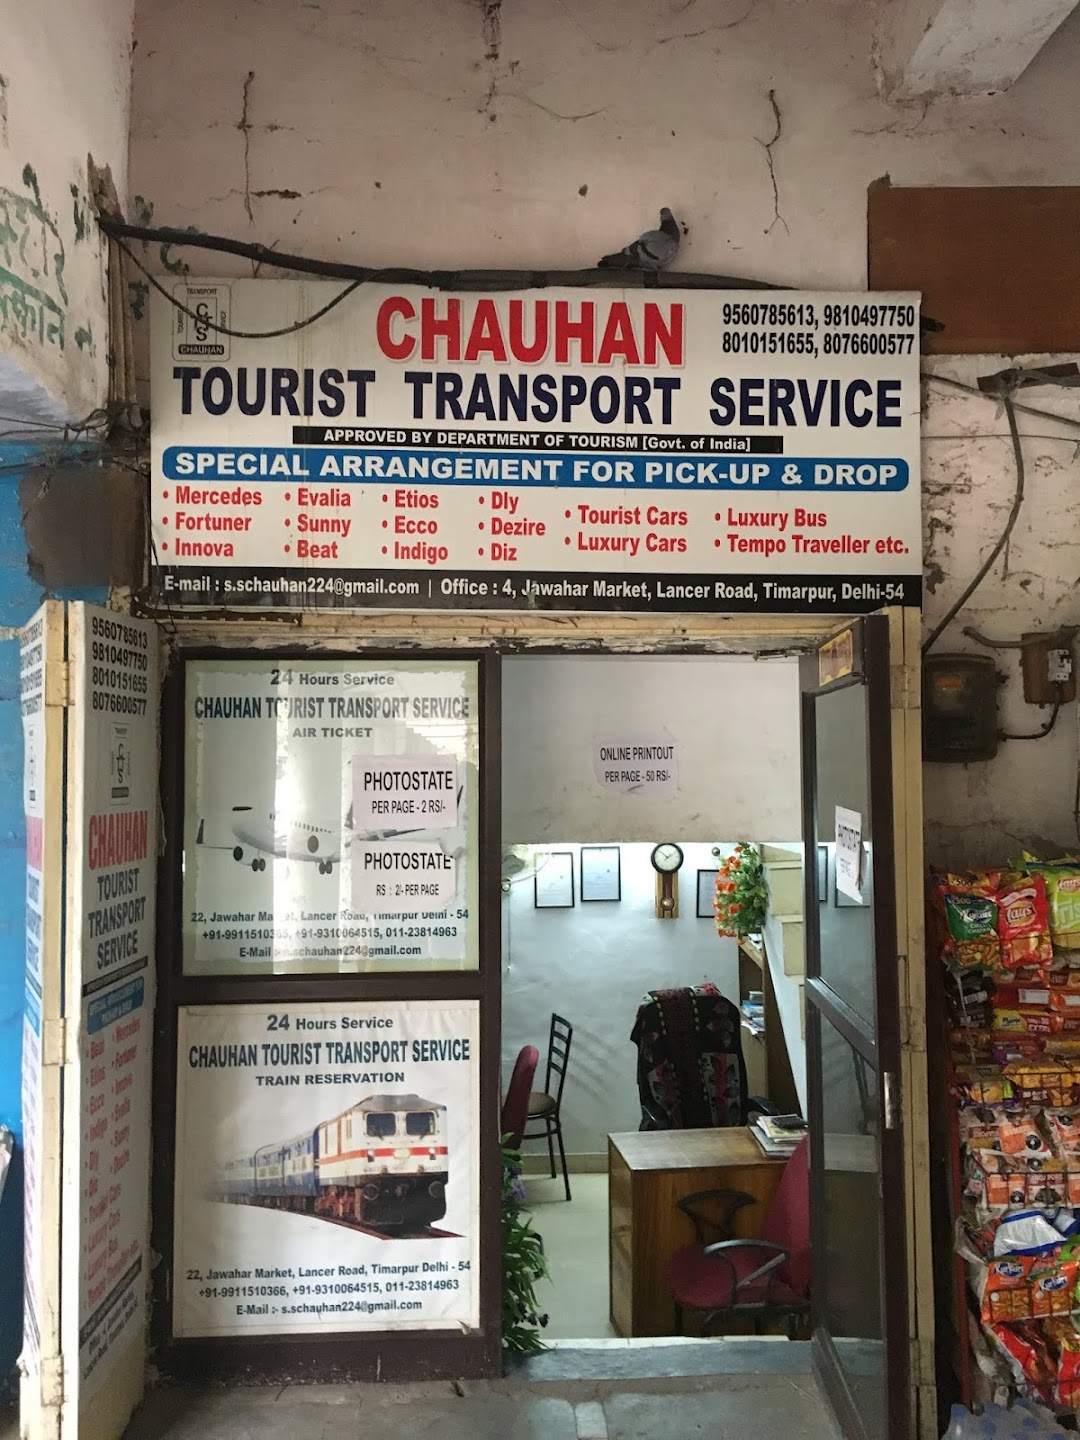 Chauhan Tourist Transport Service